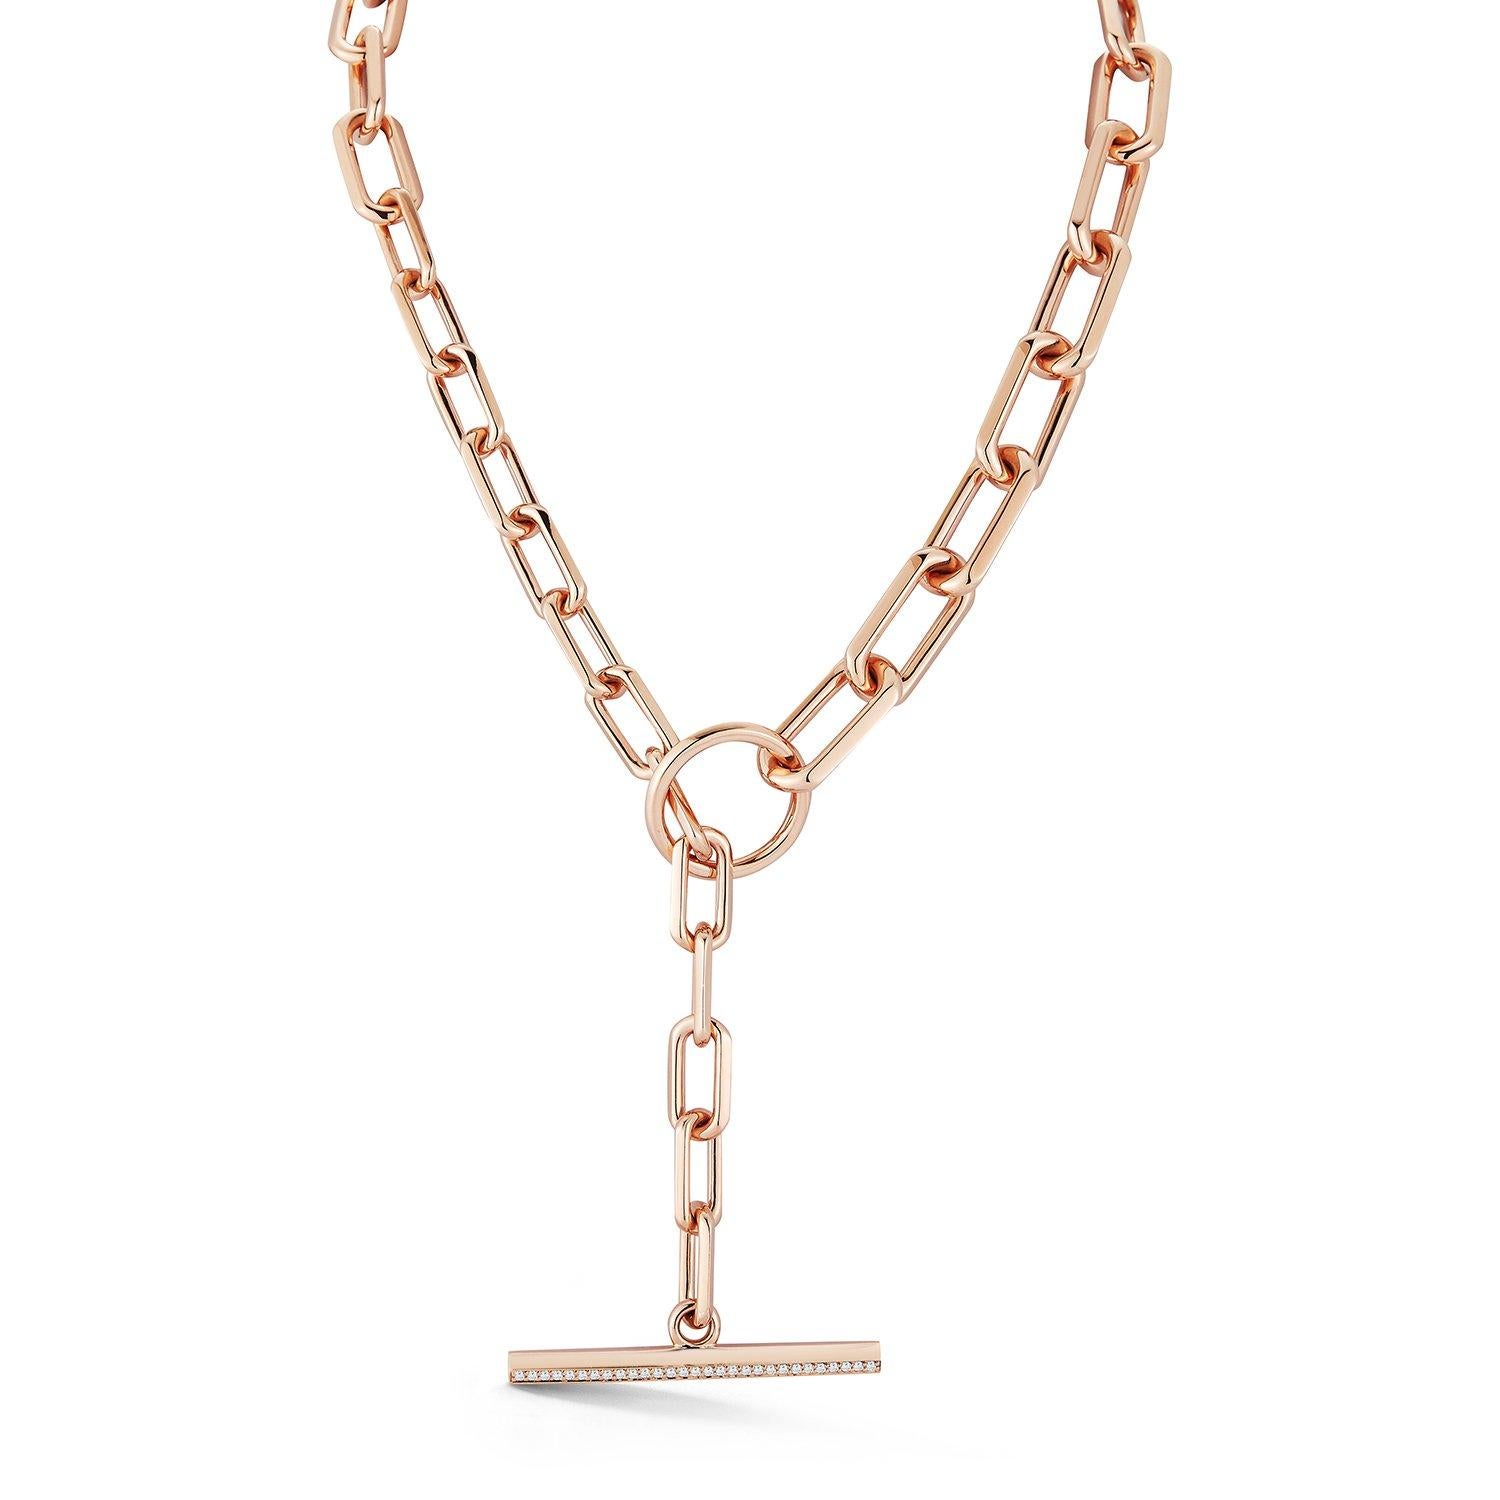 jumbo chain link necklace